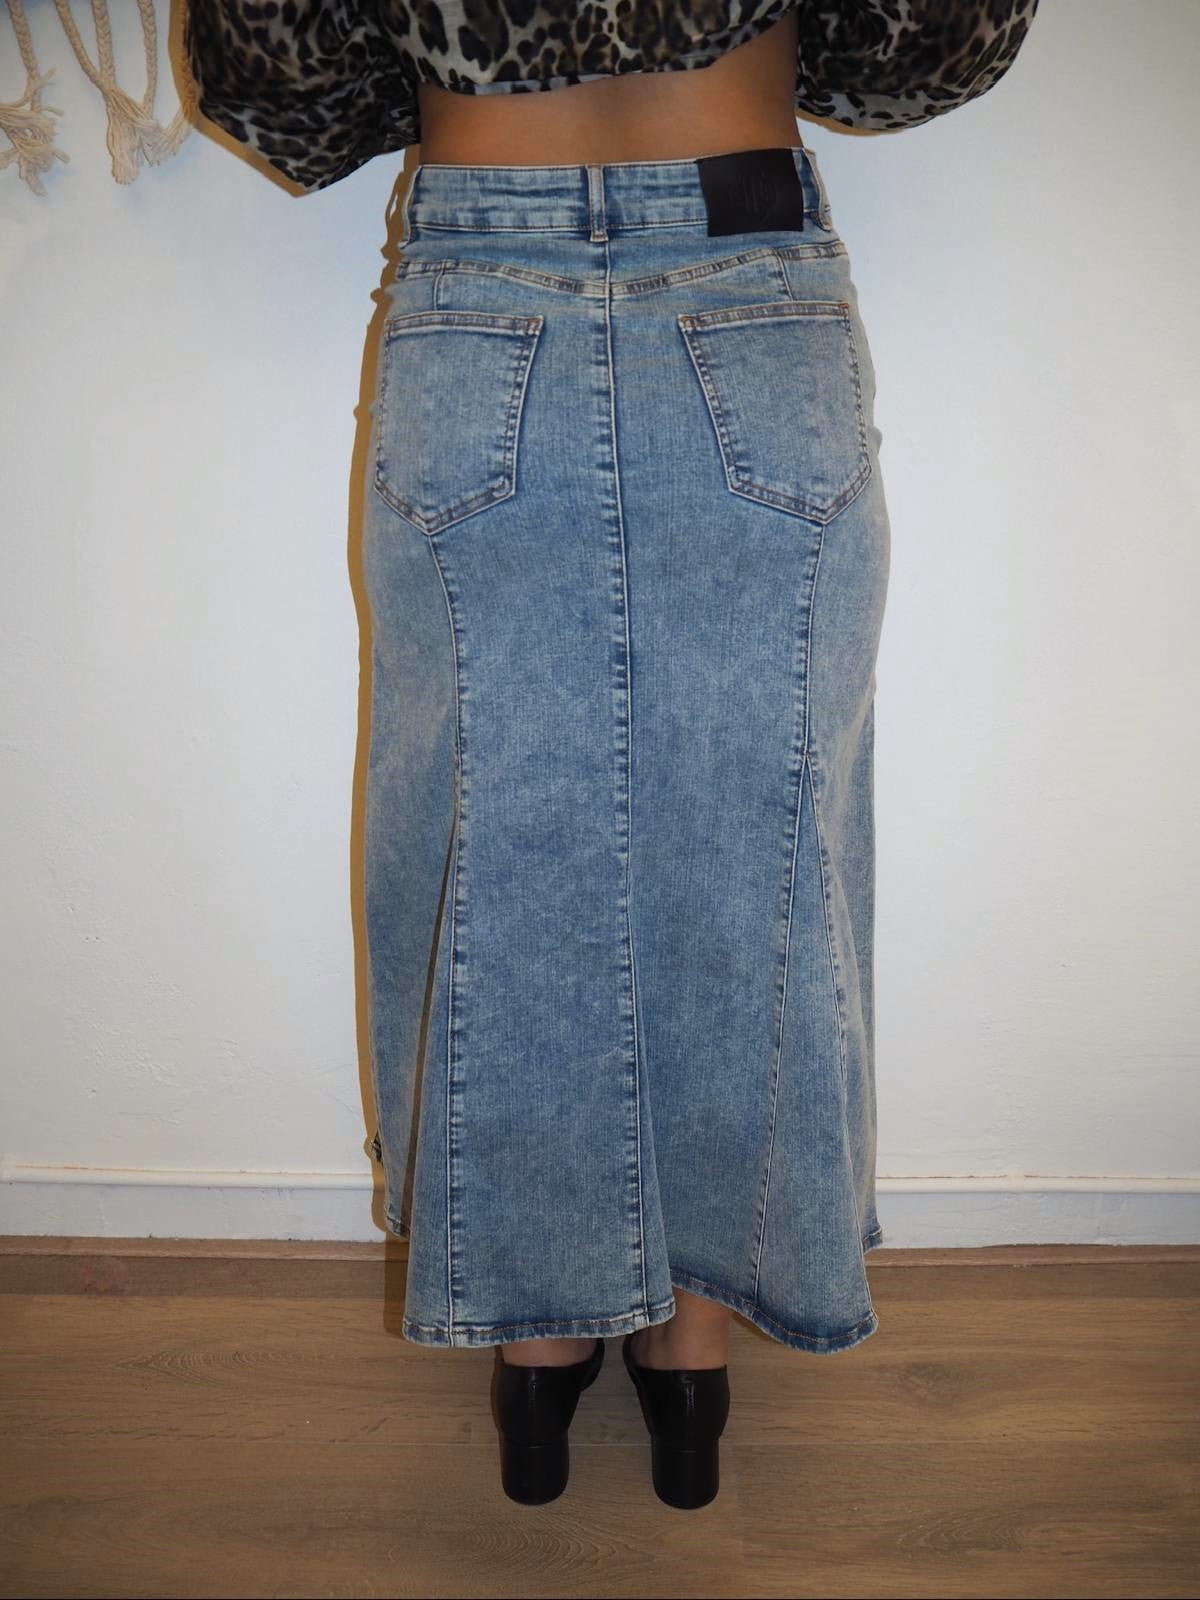 Maje - Jeans Skirt